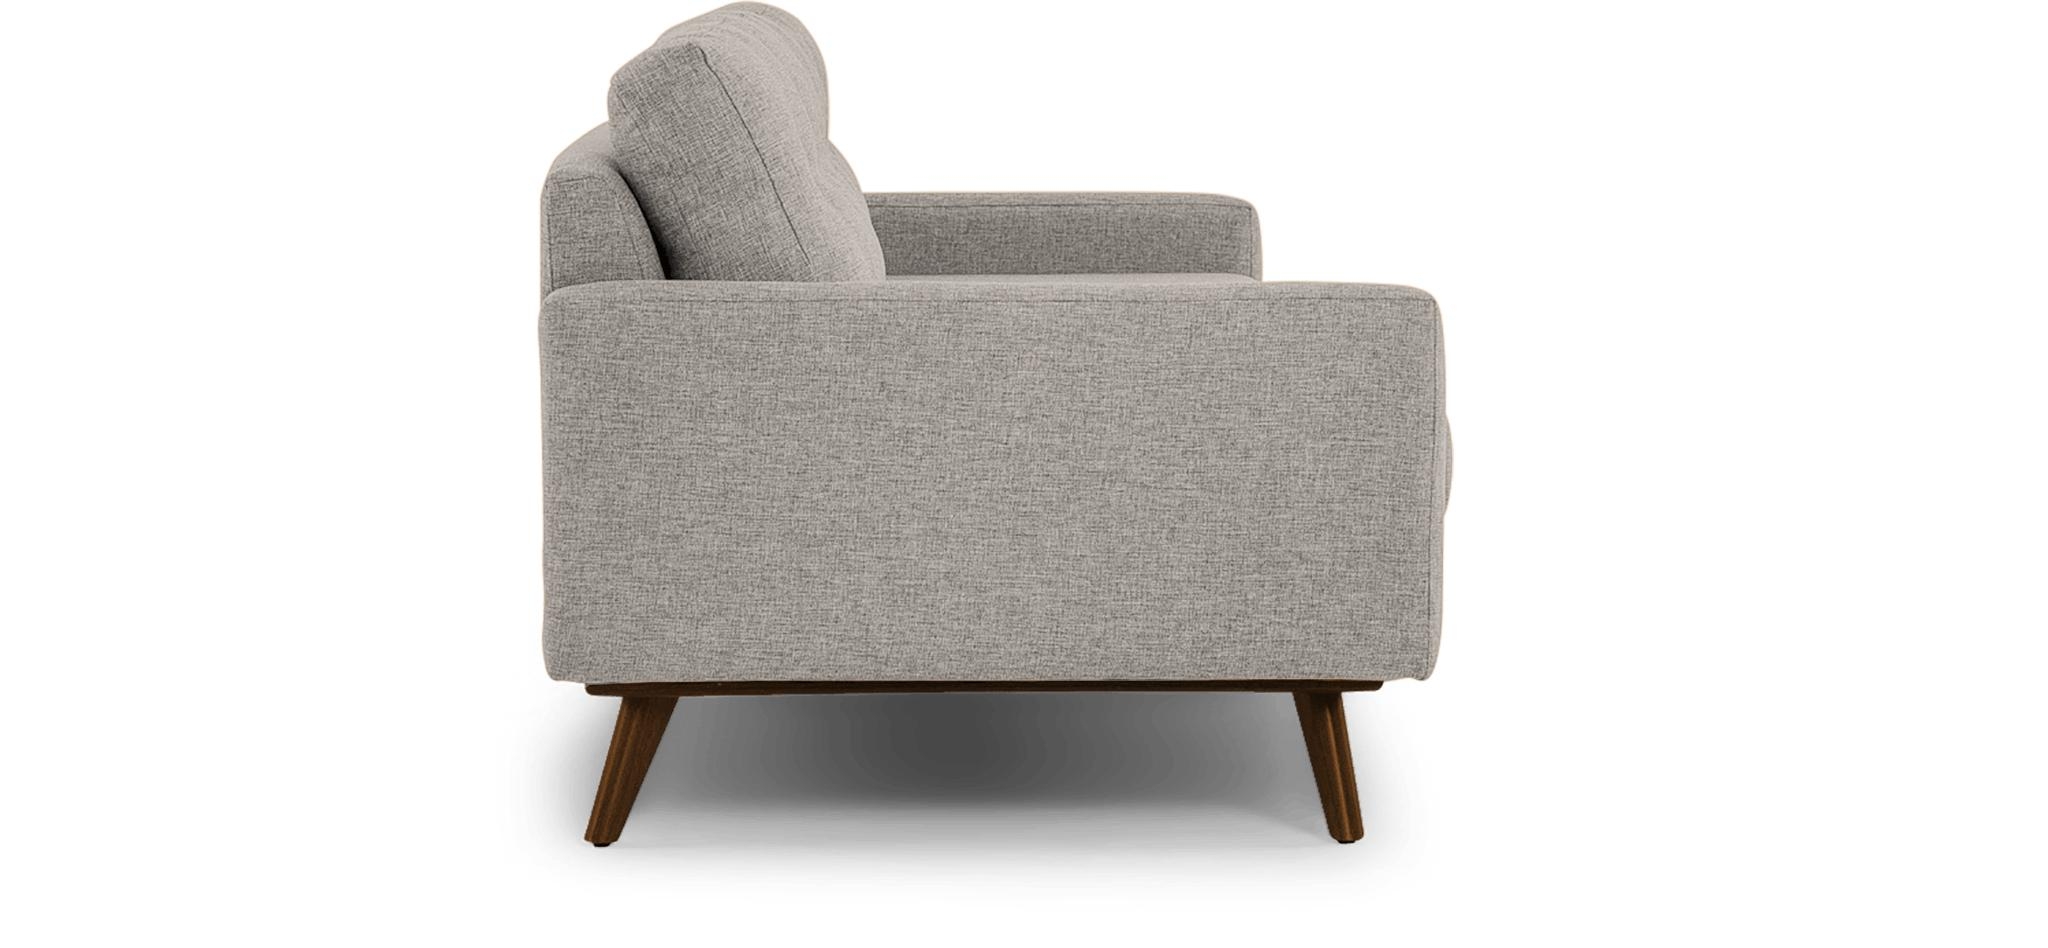 Gray Hopson Mid Century Modern Grand Sofa - Prime Stone - Mocha - Image 2